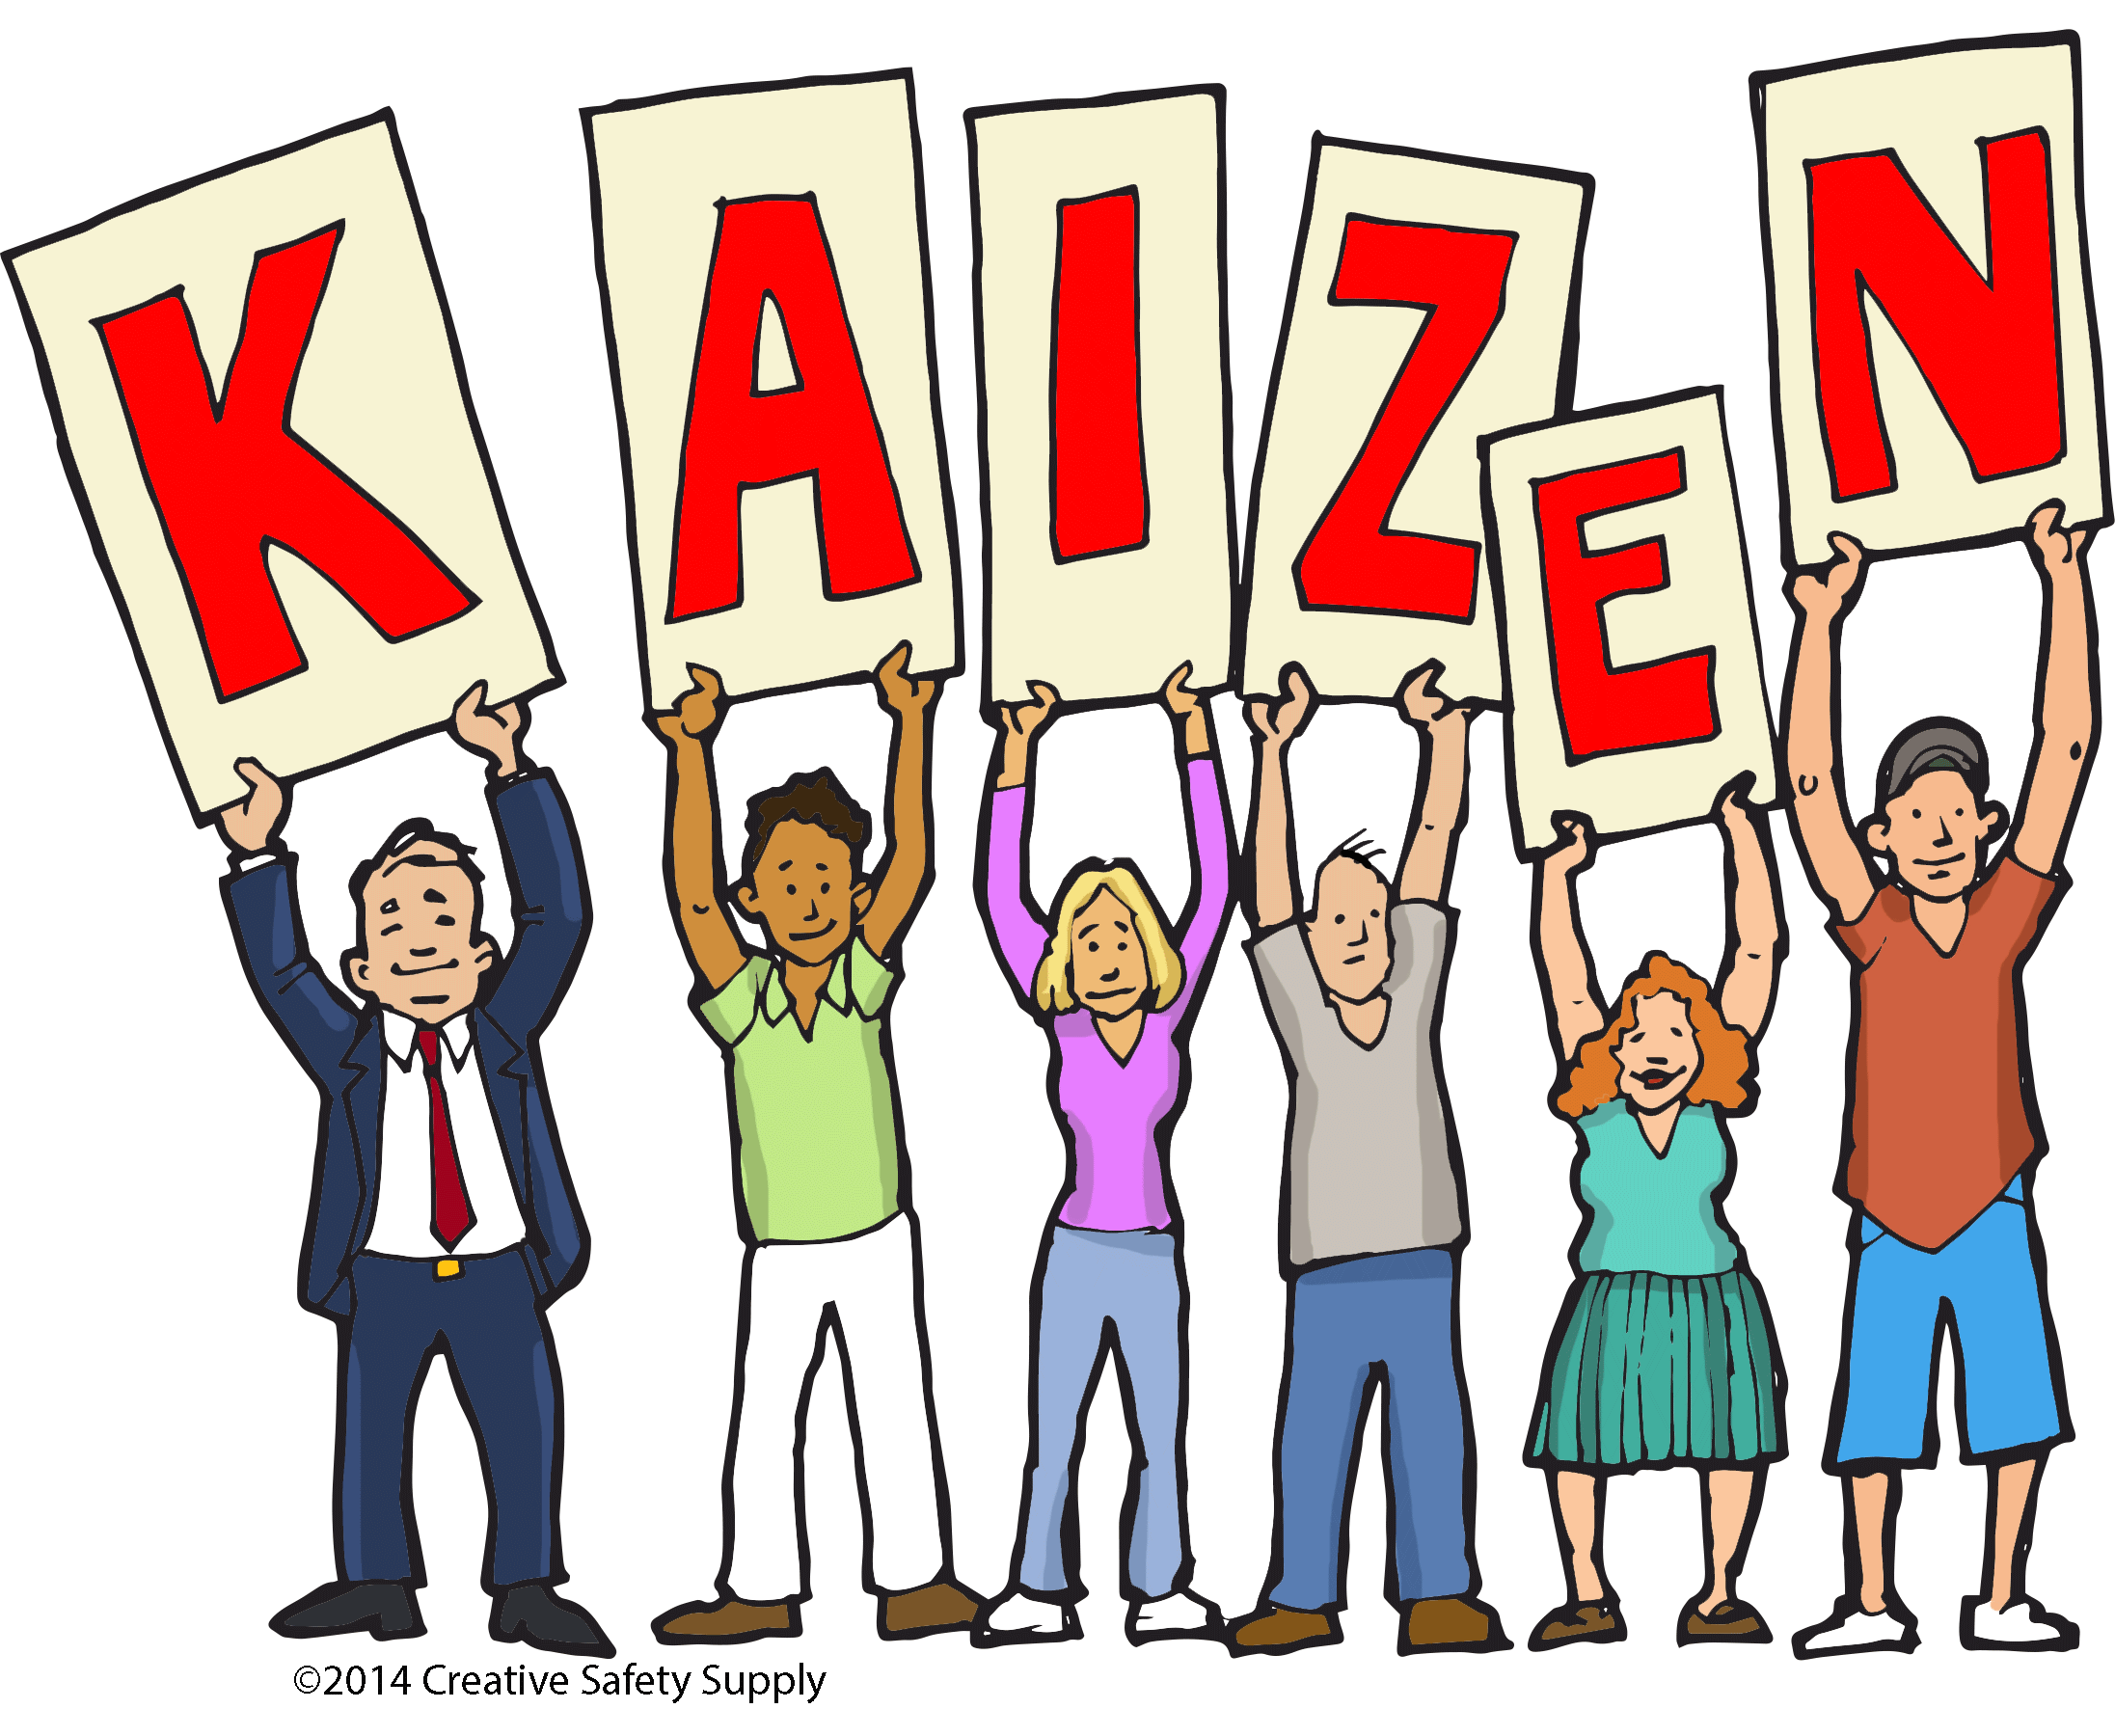 5 Tips for Kaizen Continuous Improvement